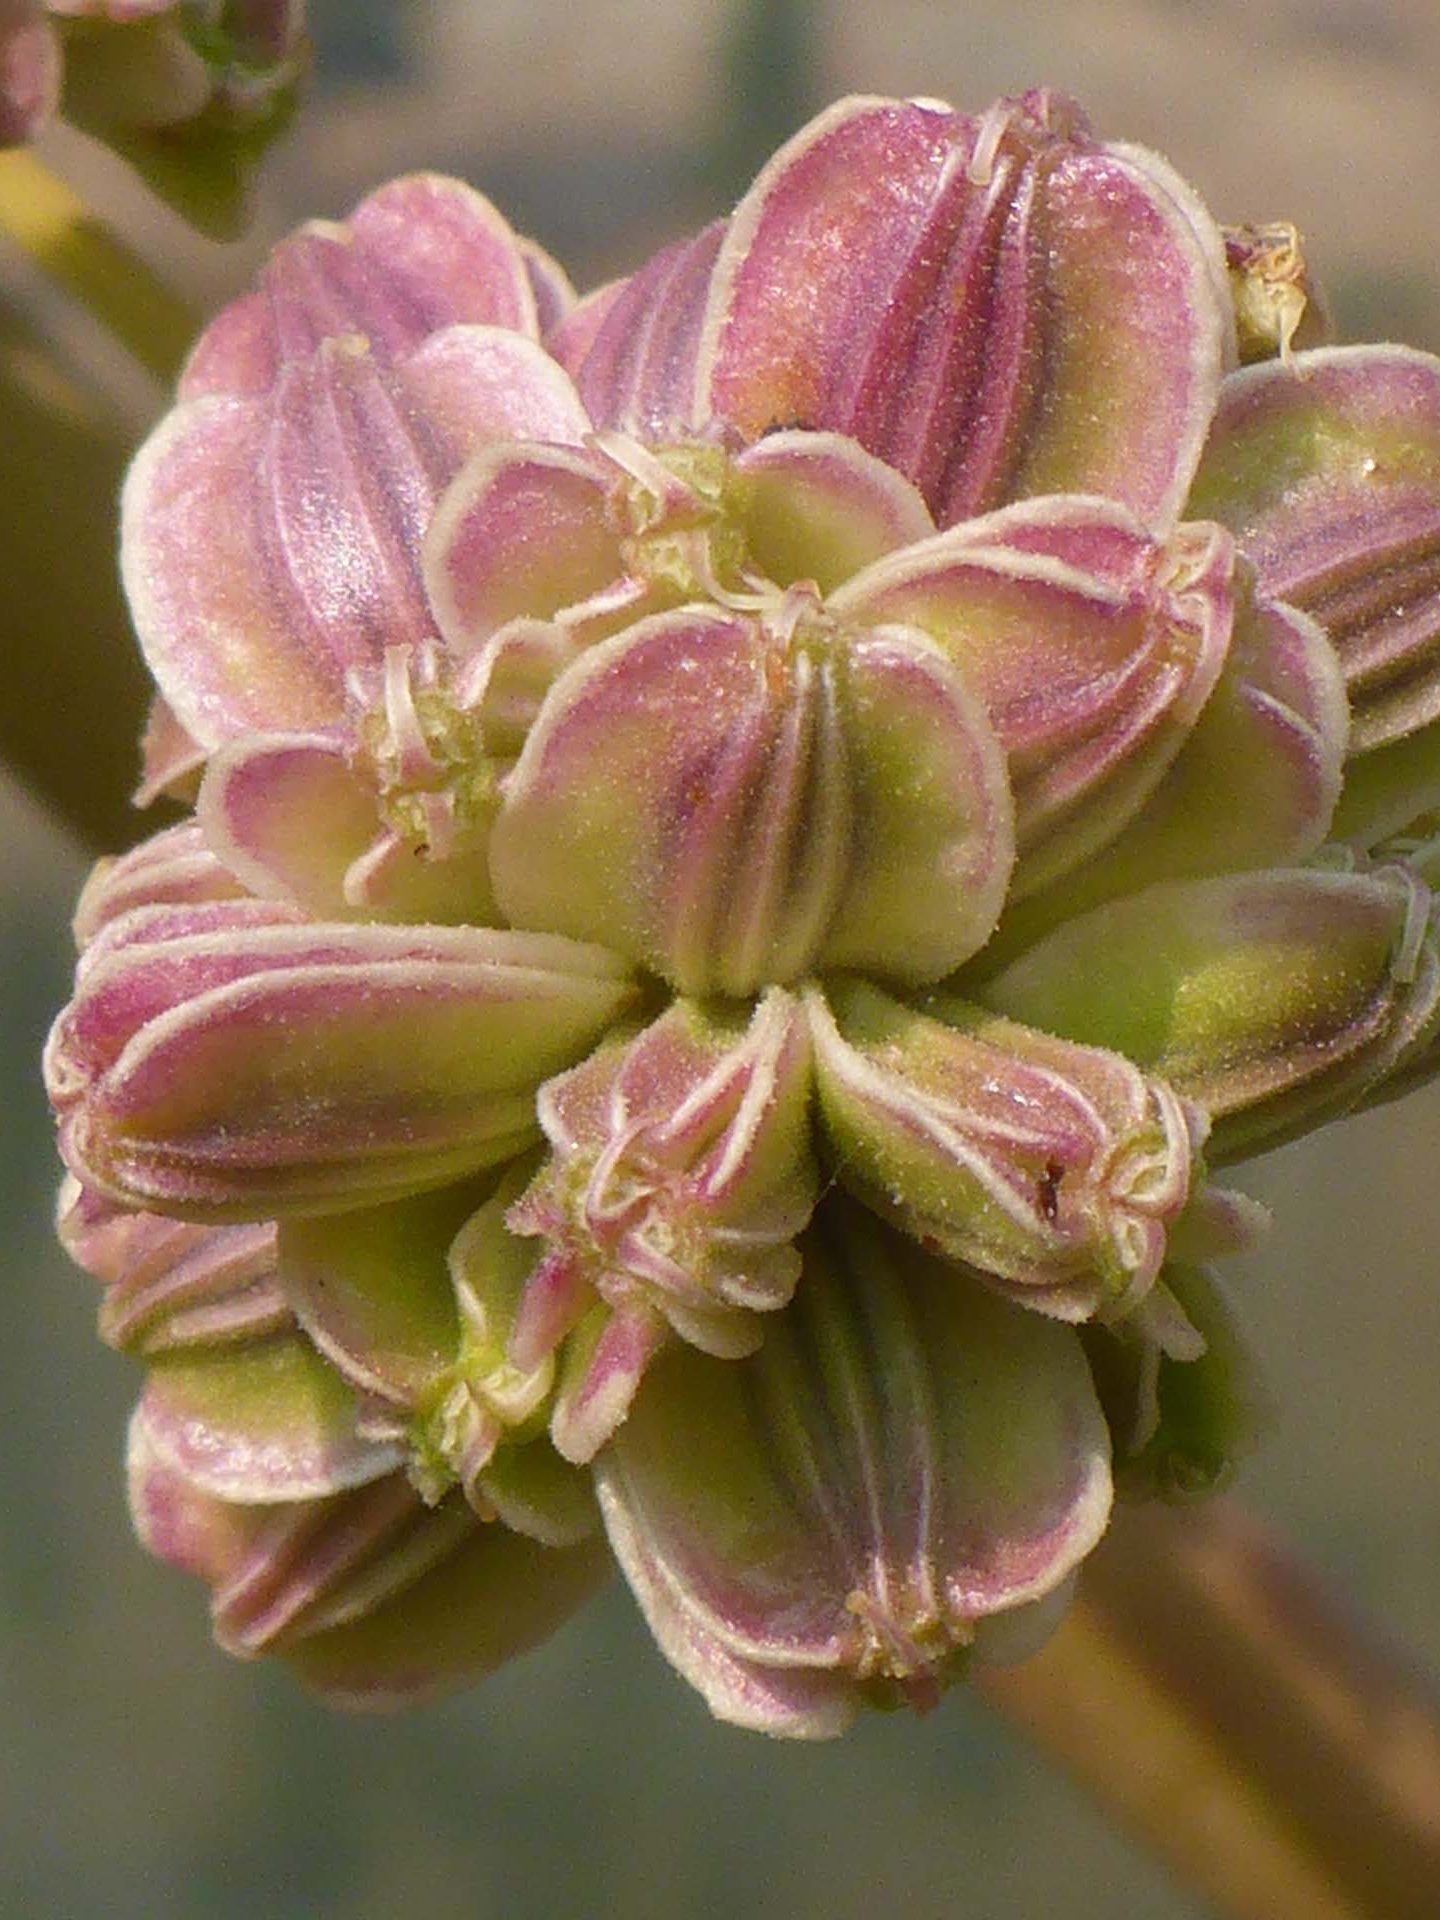 Angelica seeds close-up. D. Burk.